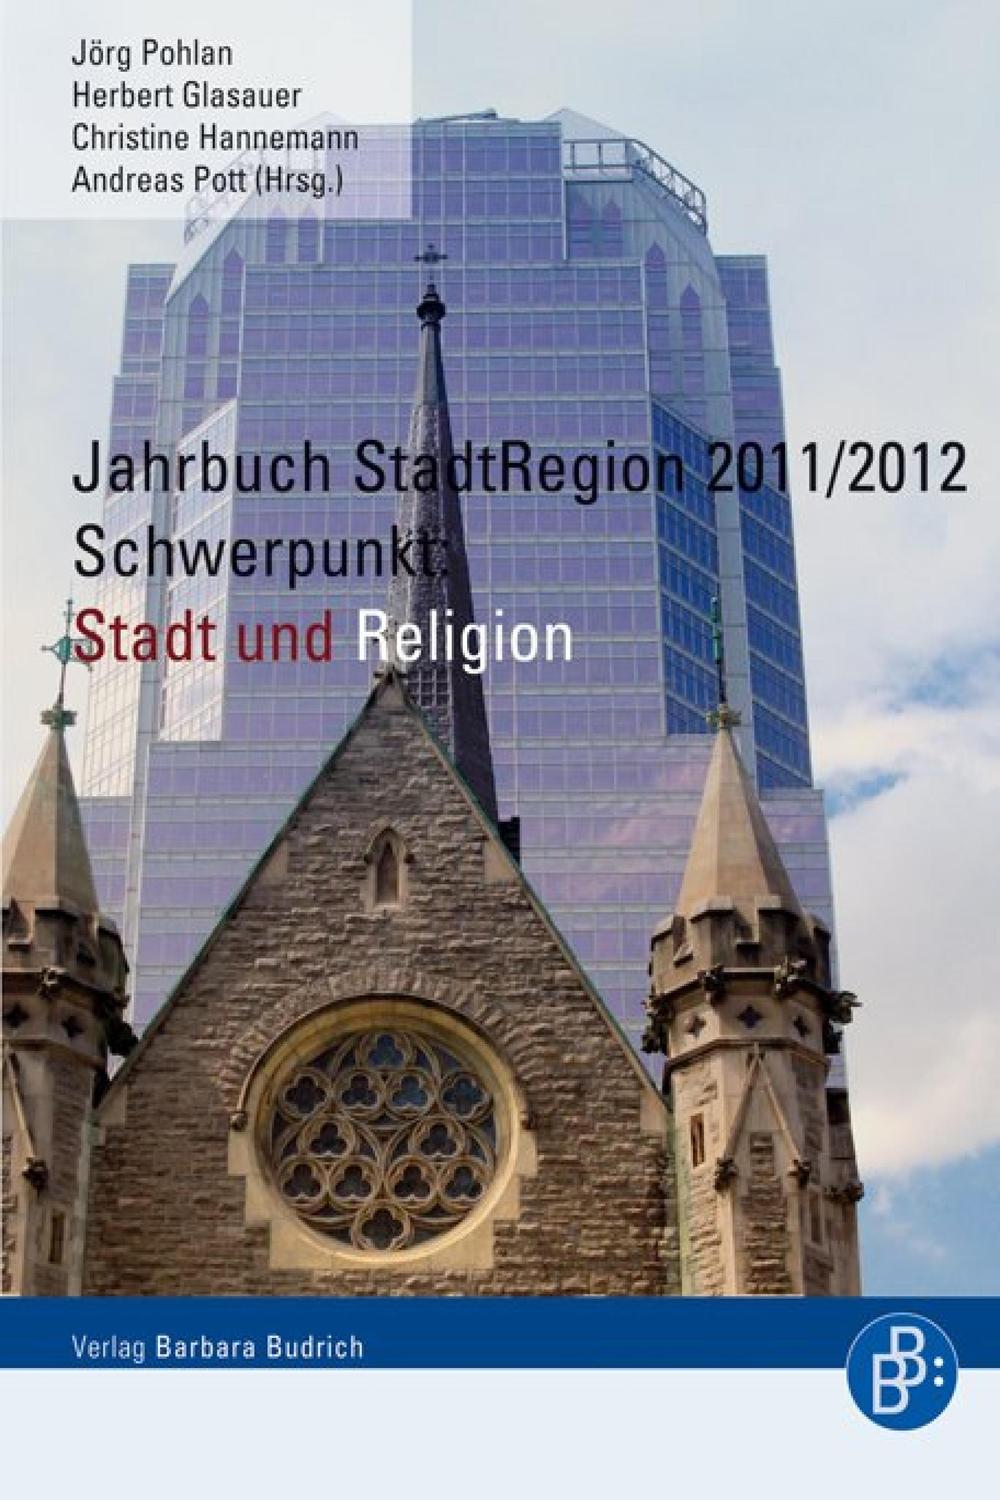 Jahrbuch StadtRegion 2011/2012 - Jörg Pohlan, Herbert Glasauer, Christine Hannemann, Andreas Pott